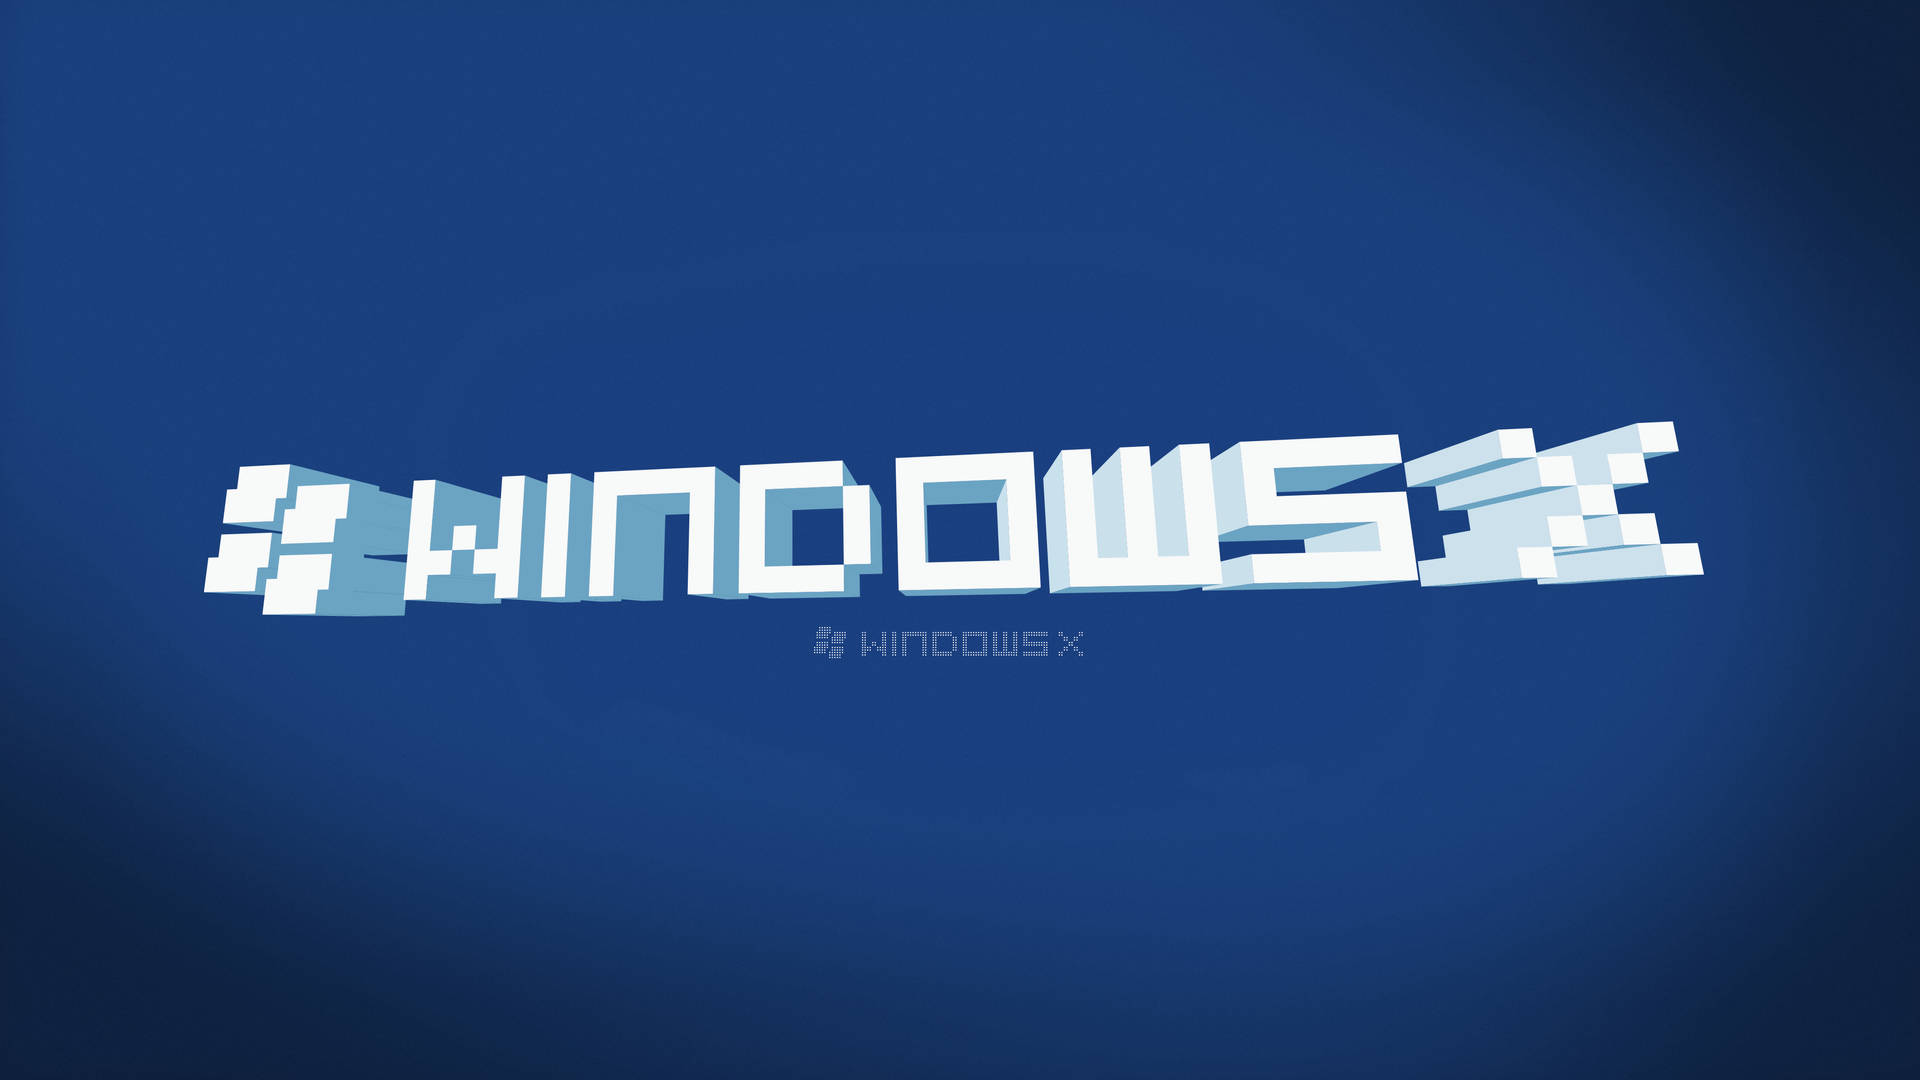 Windows 10 Hd Blue X Background